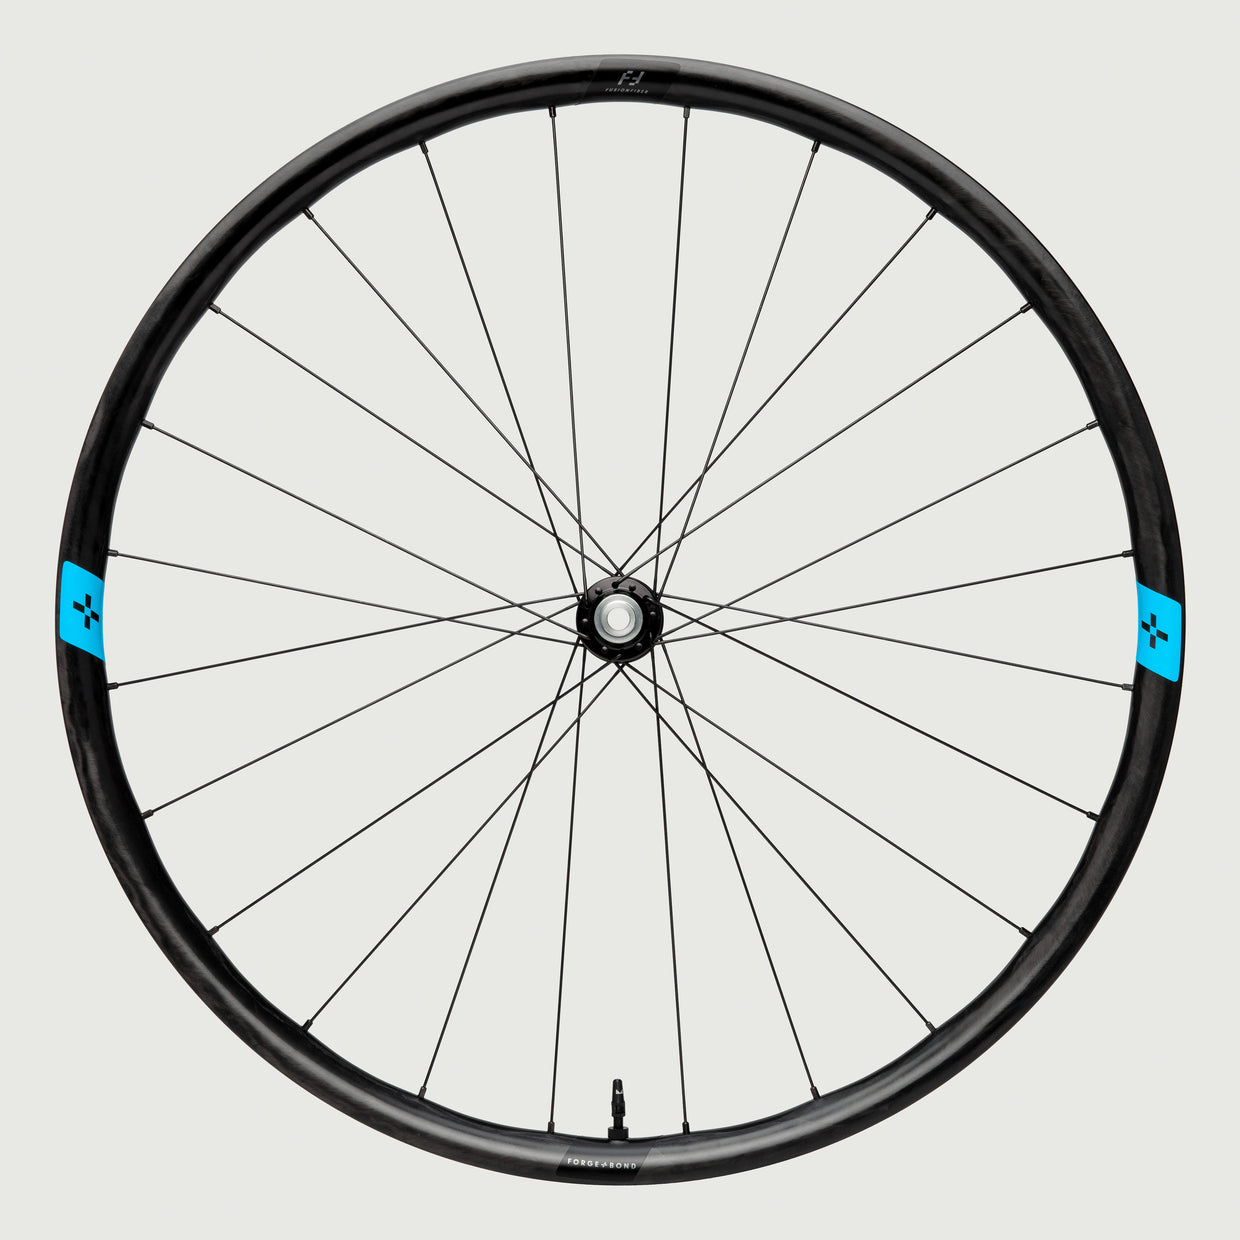 F+B 25 GR Gravel profile front wheel